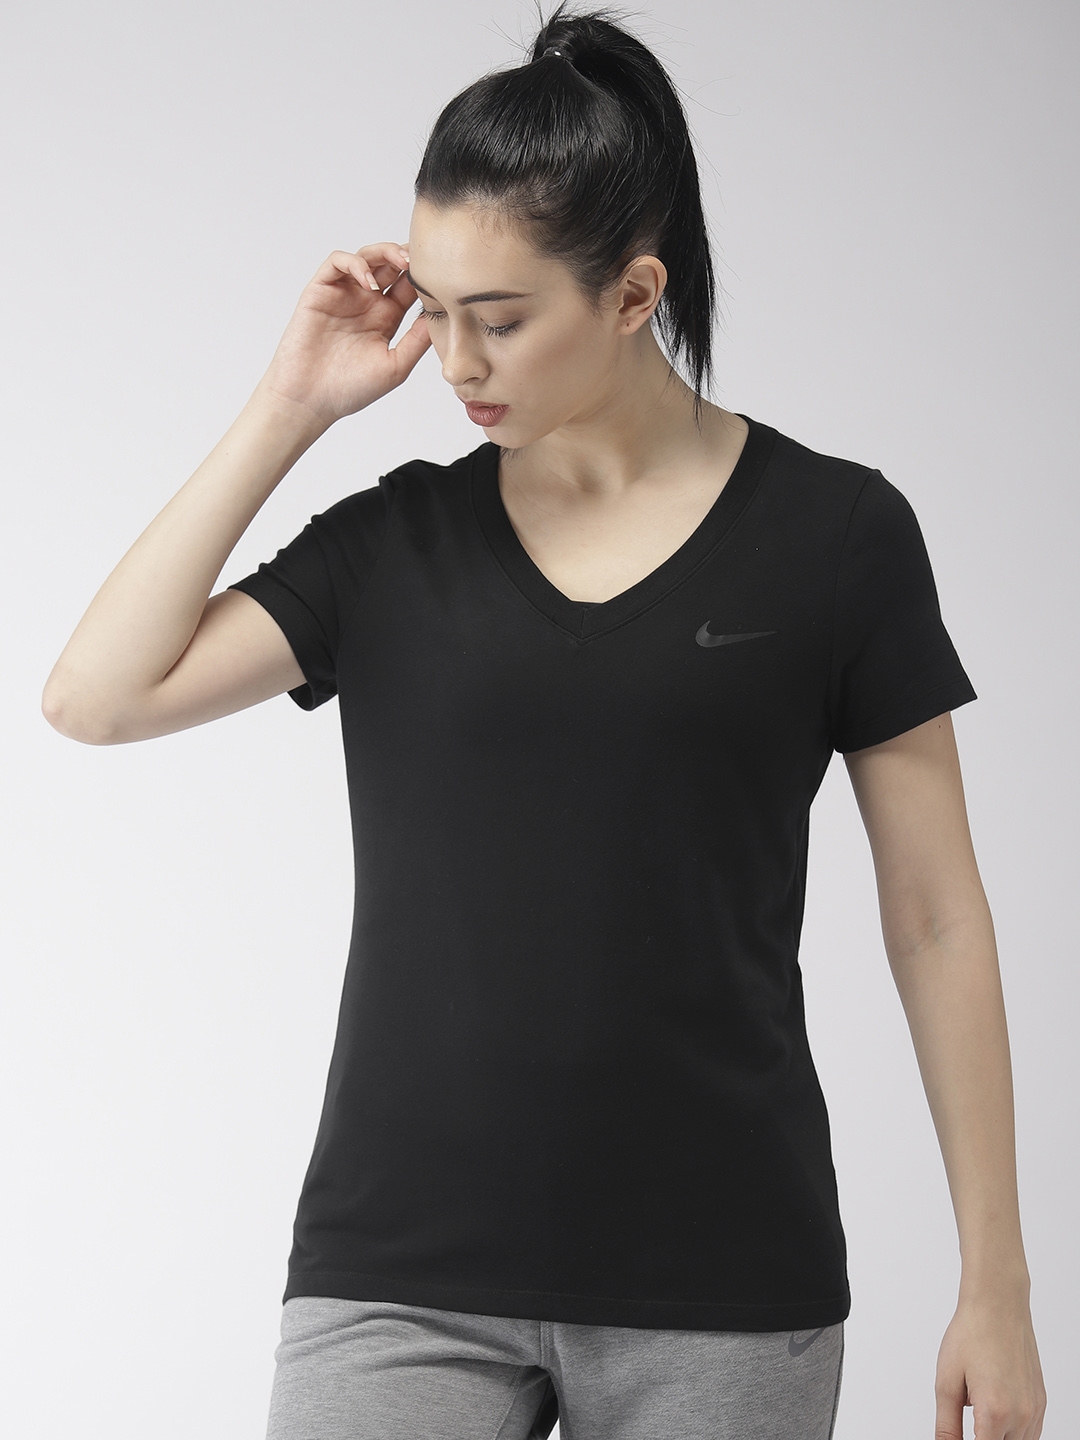 women's v neck dri fit shirts